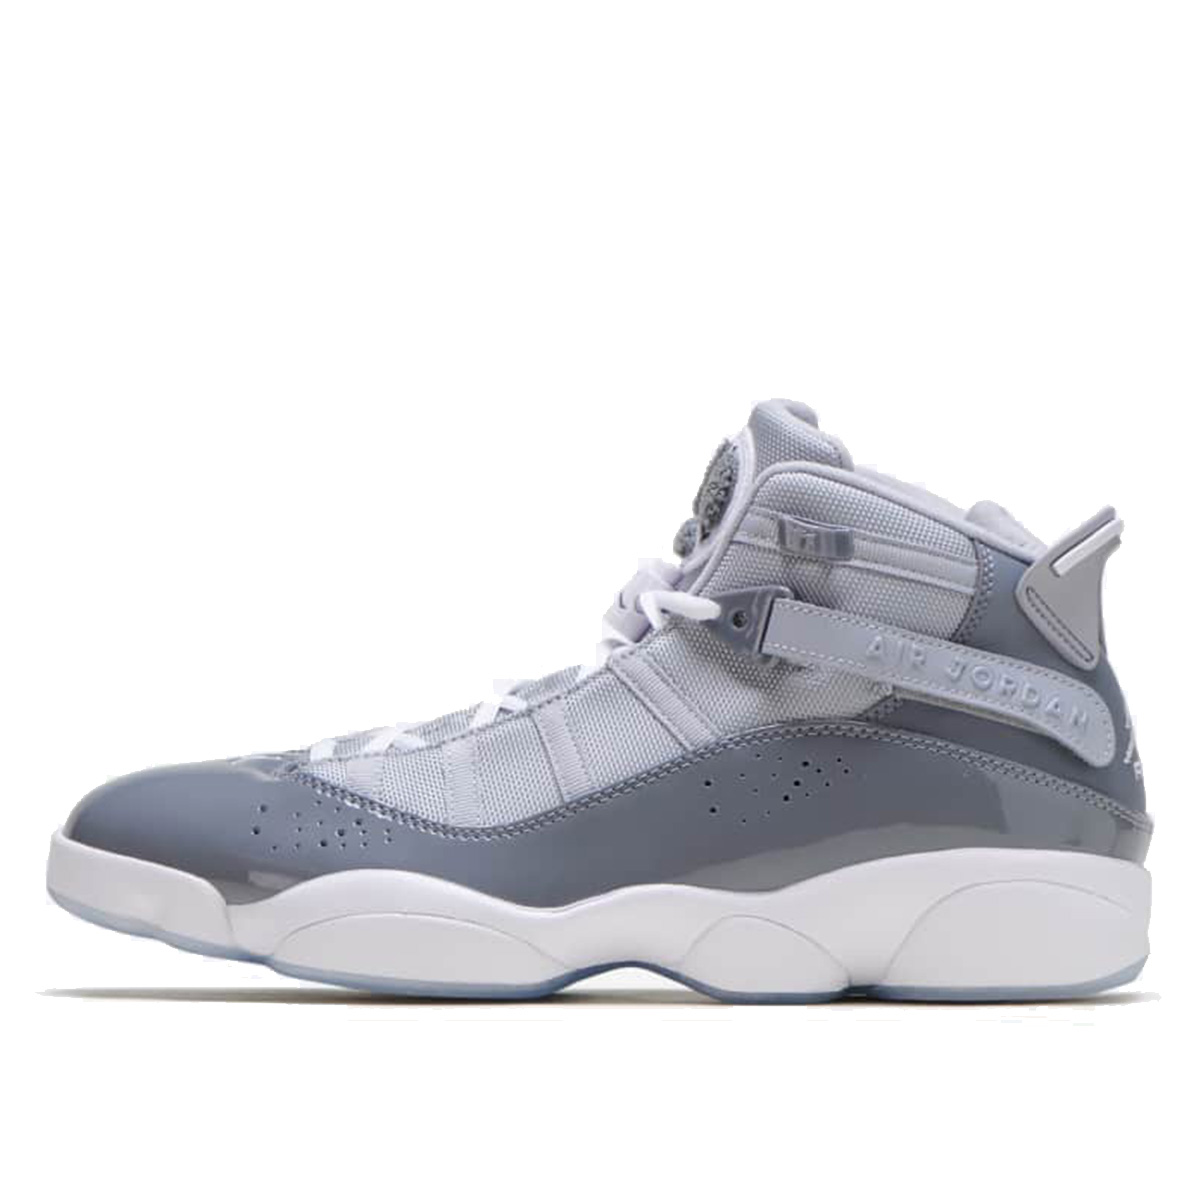 Air Jordan Nike AJ XI 6 Rings Cool Grey (2019) | 322992-015 - KLEKT